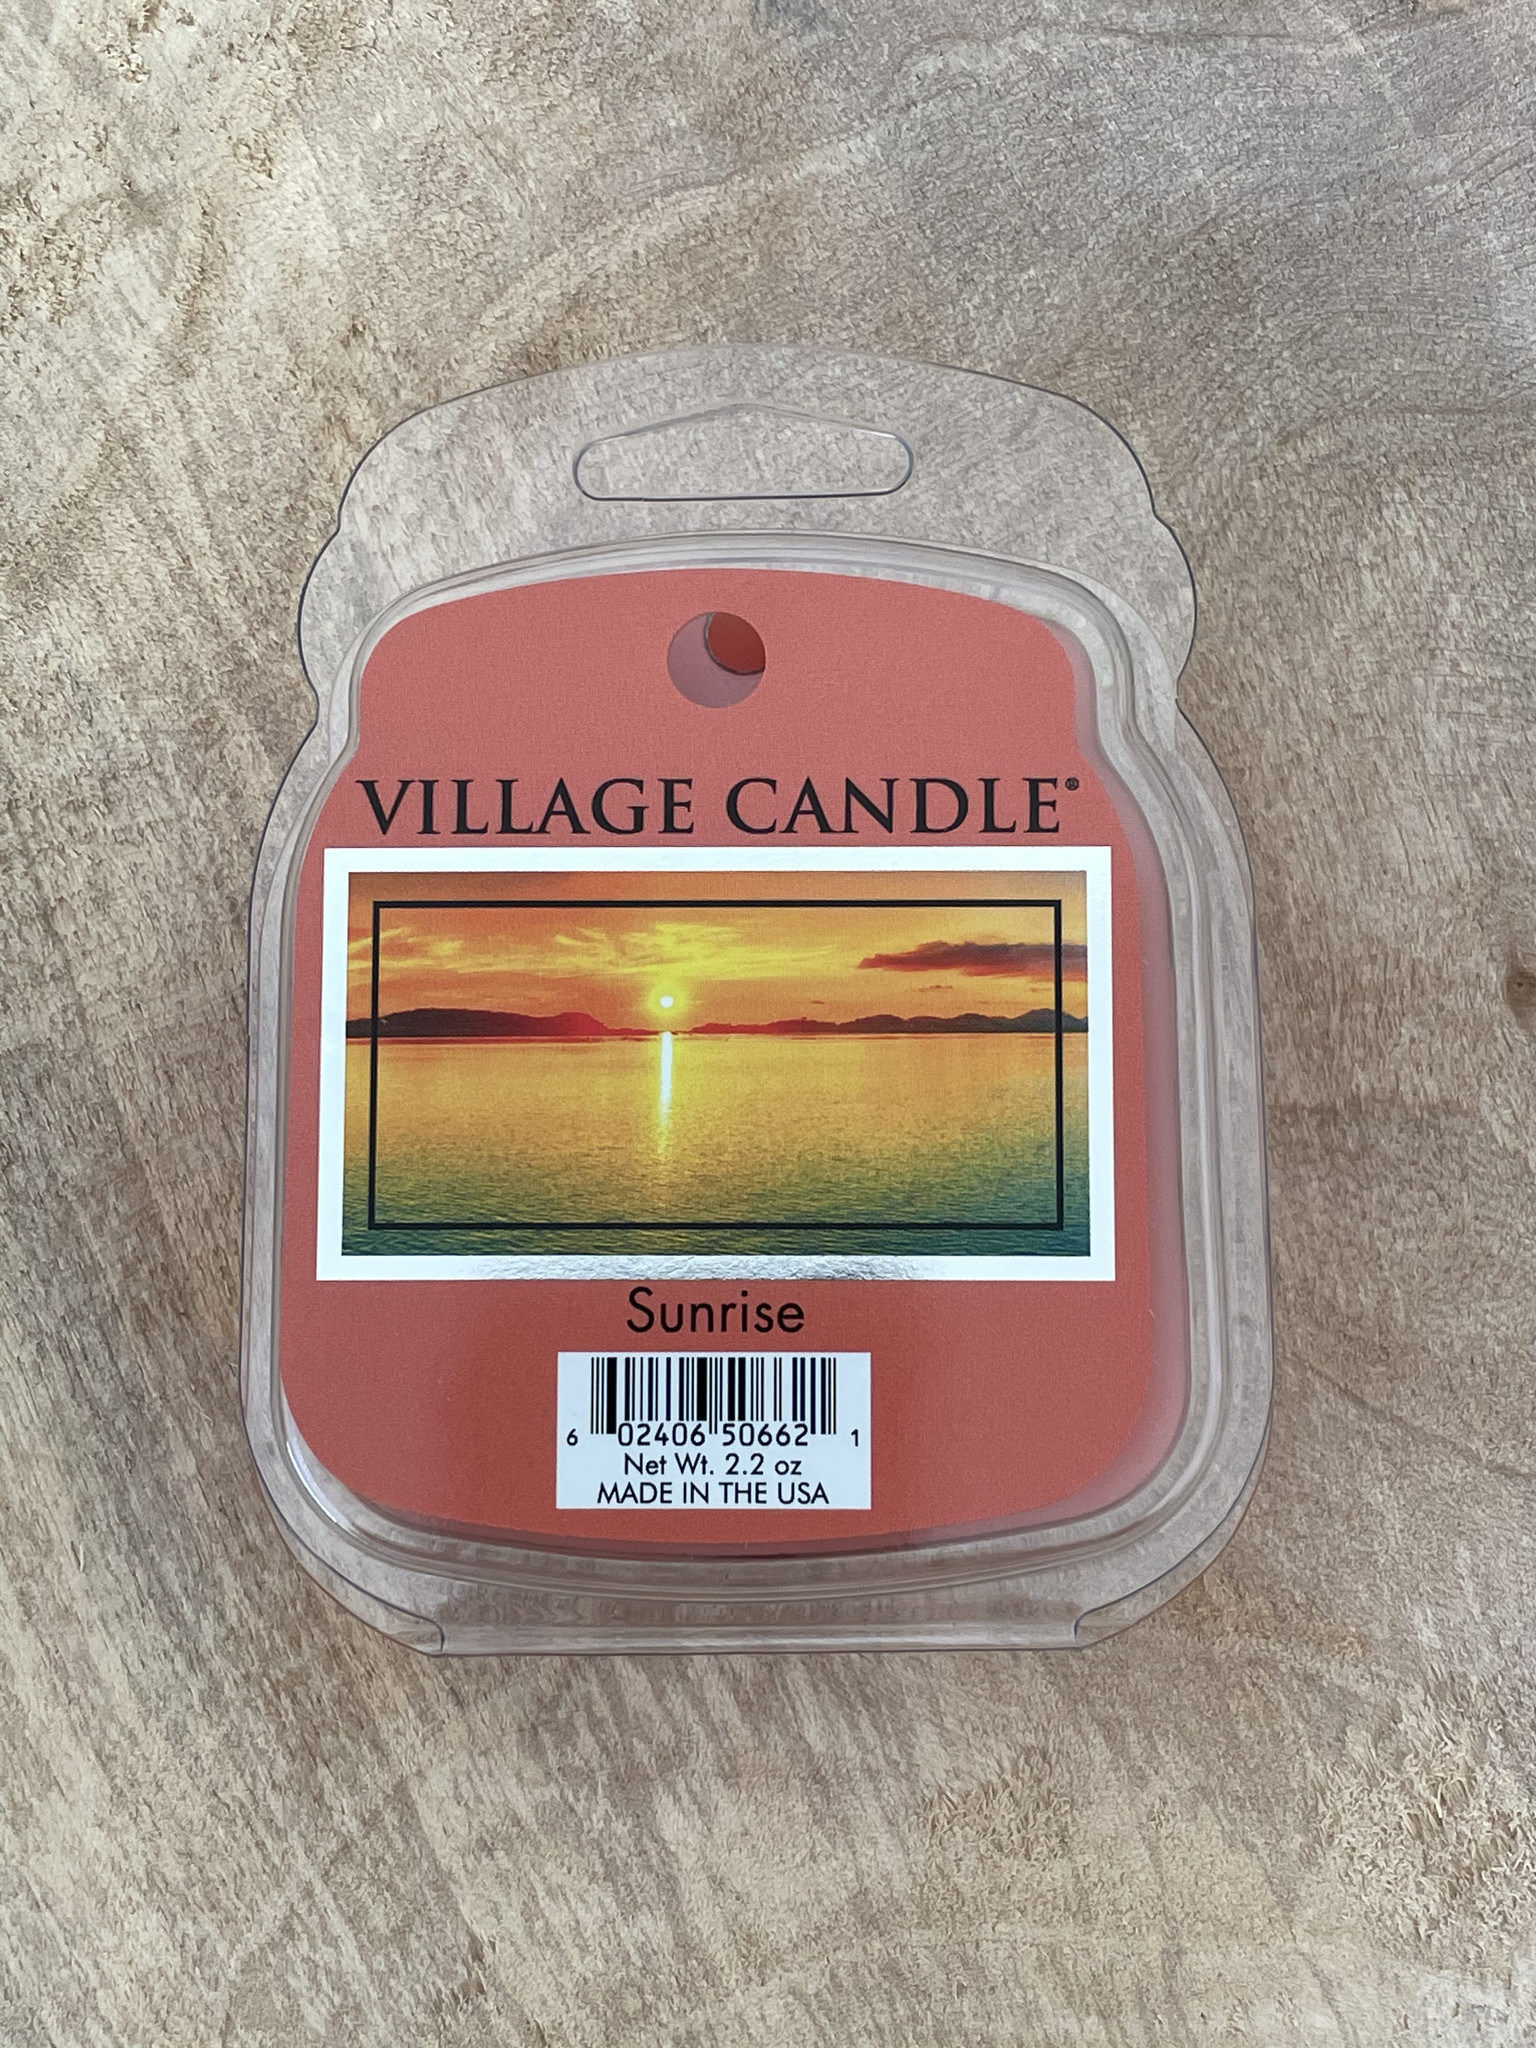 Village Candle Village Candle Sunrise Wax Melt